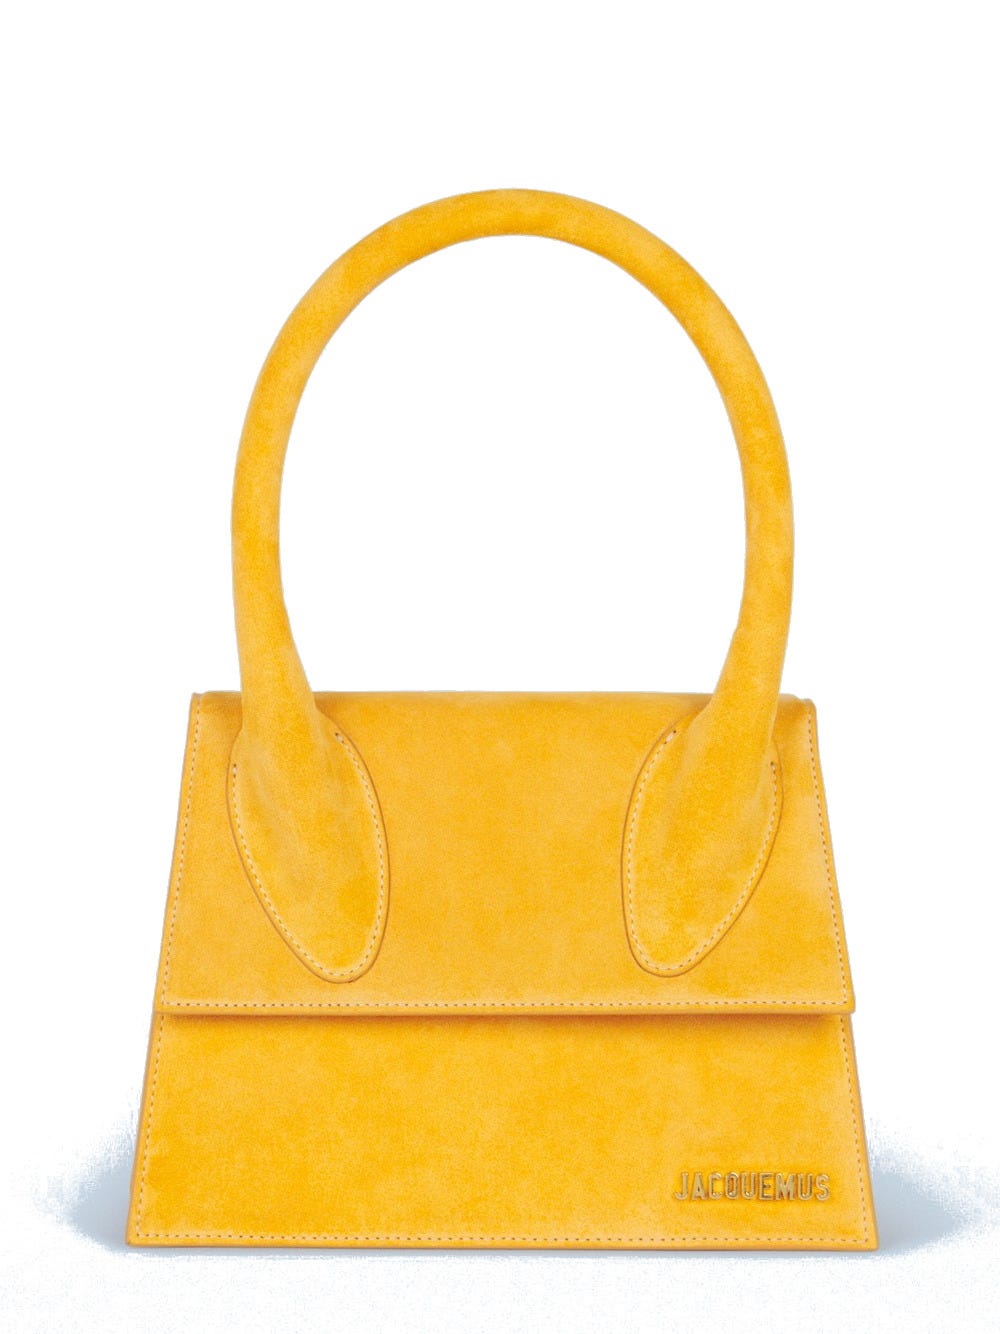 JACQUEMUS Handbags for Women | ModeSens